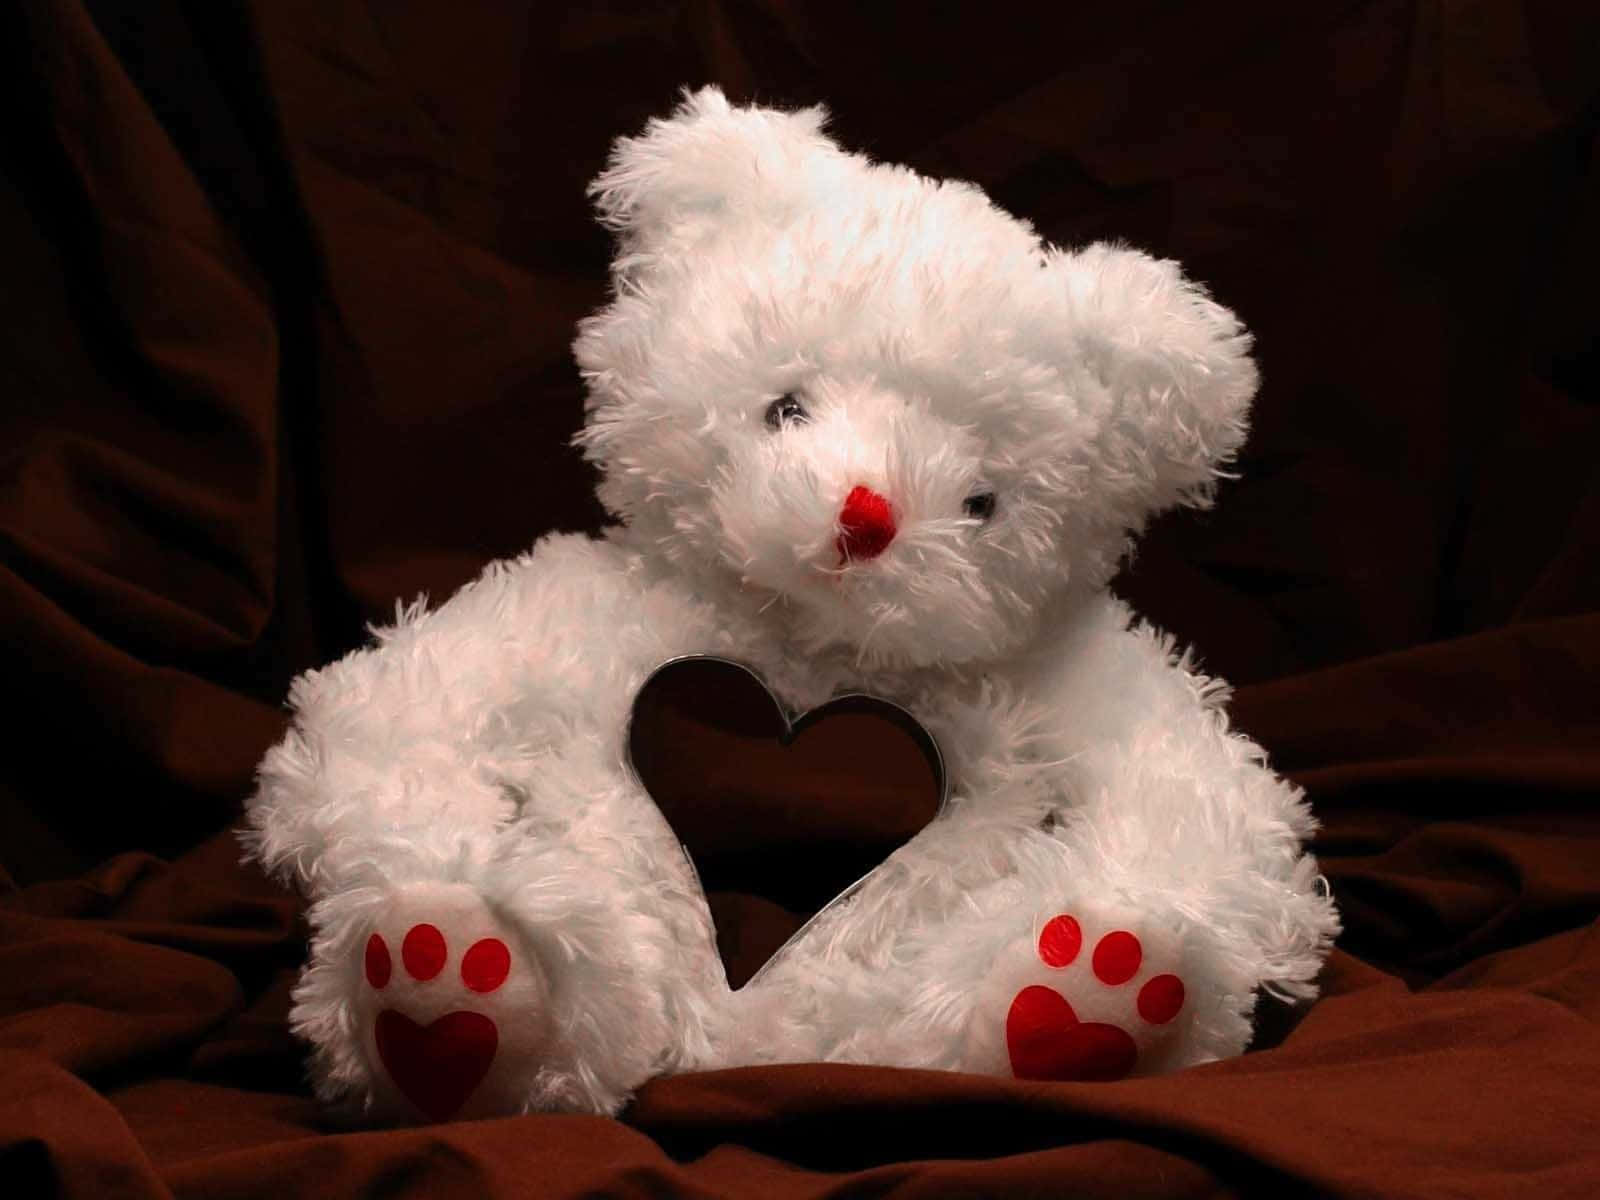 A cutesy teddy bear is snuggled up and waiting for a hug.